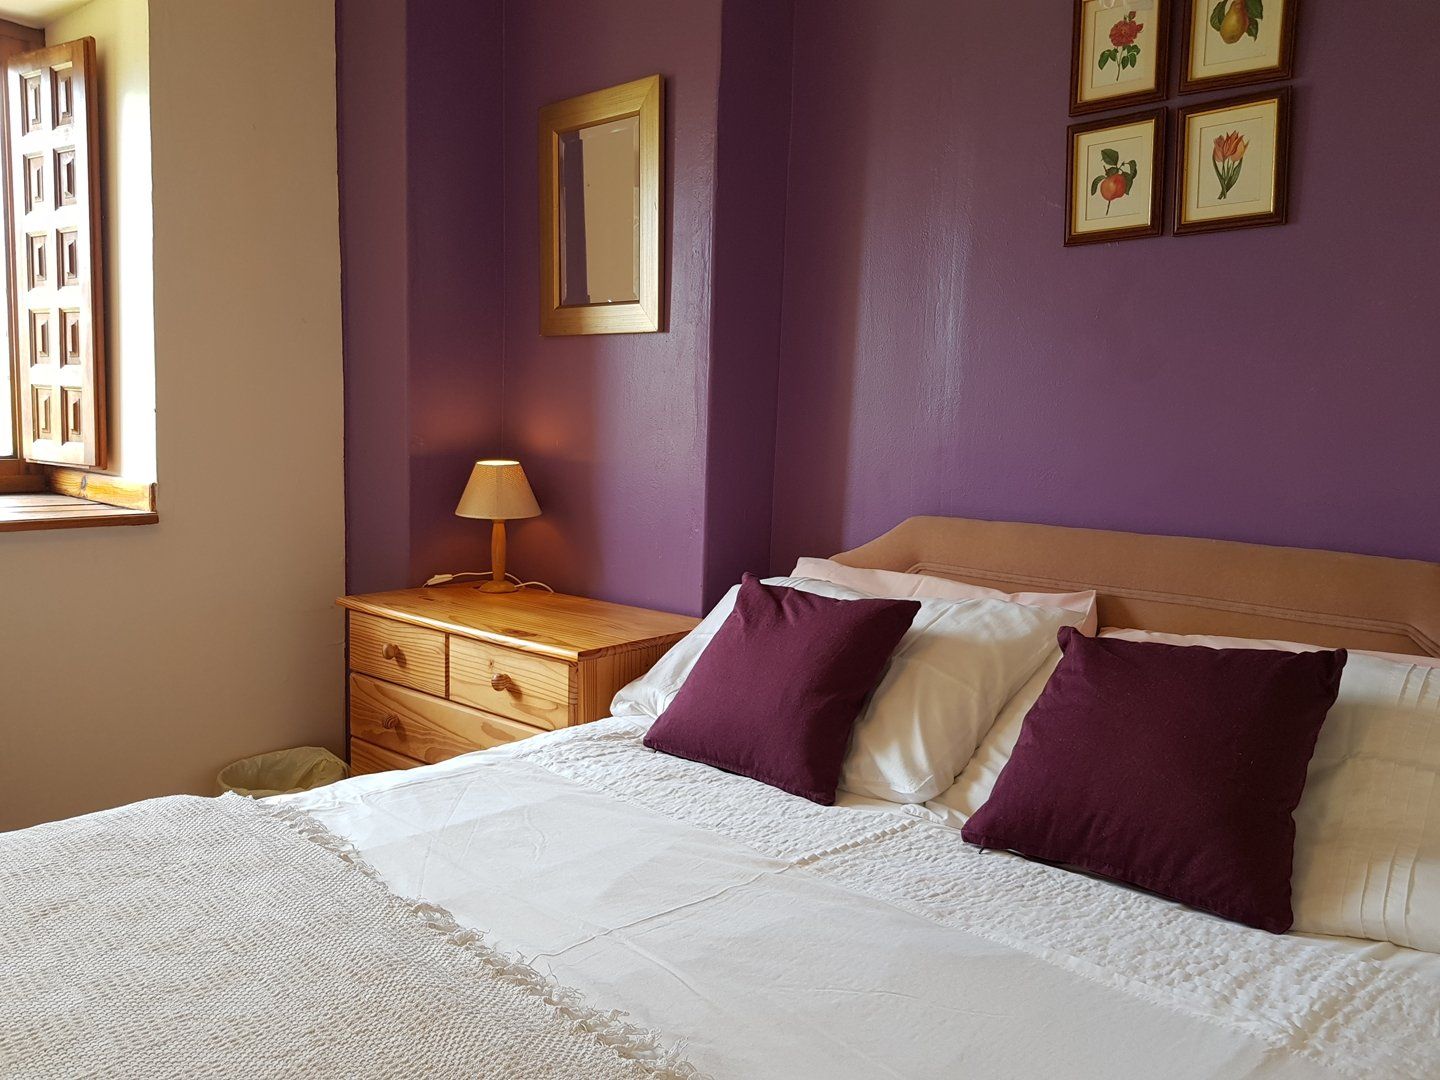 slaapkamer met paarse muur en paarse kussens op het bed